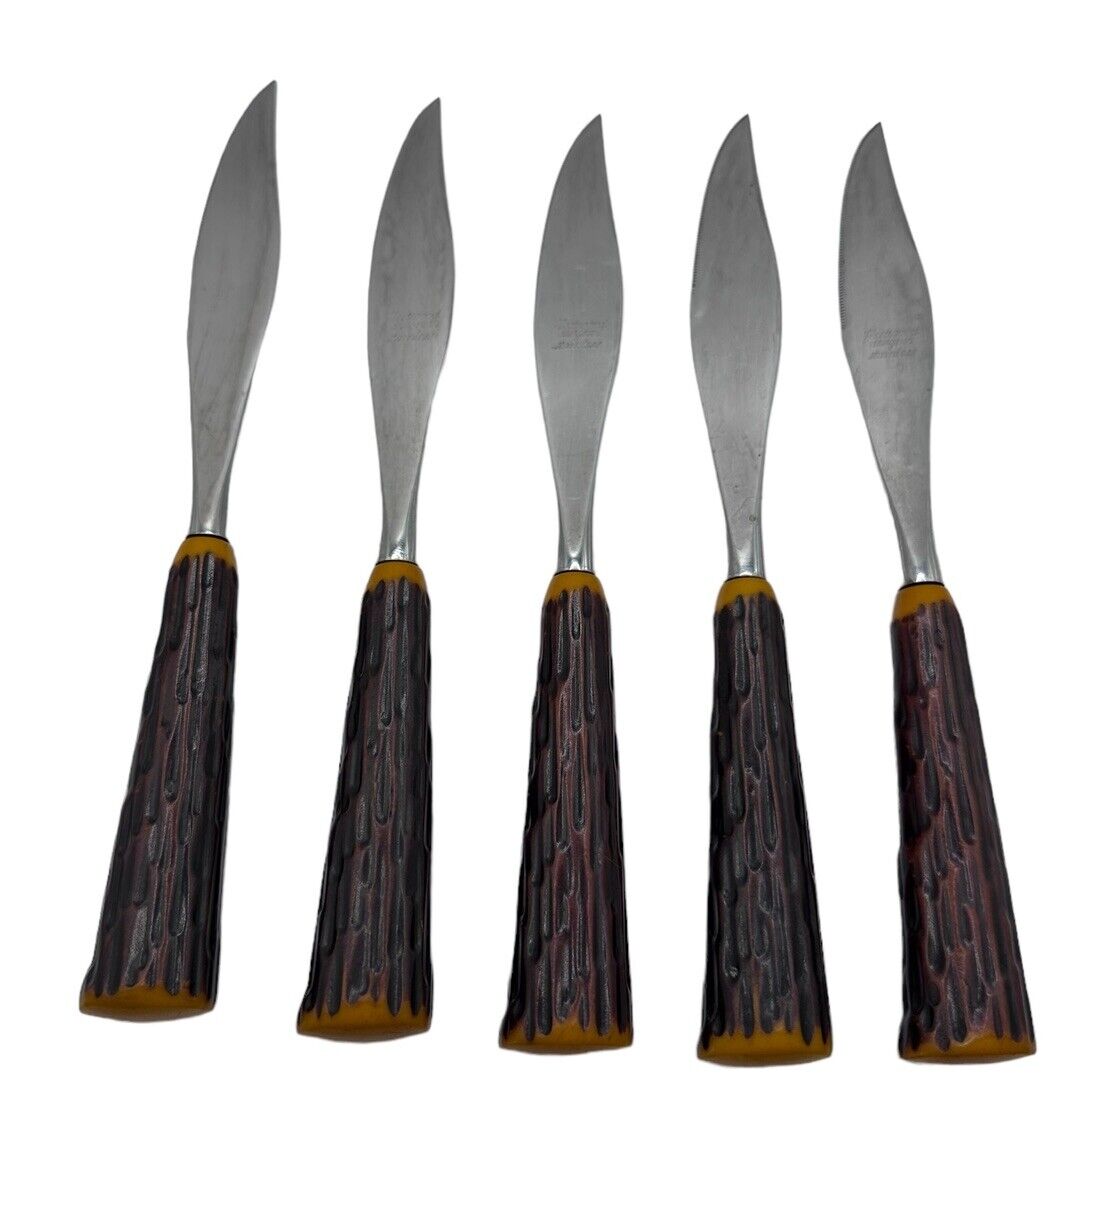 Vtg Retro Fleetwood Designs Steak Knives Stainless Steel Wood Handles Set Of 5